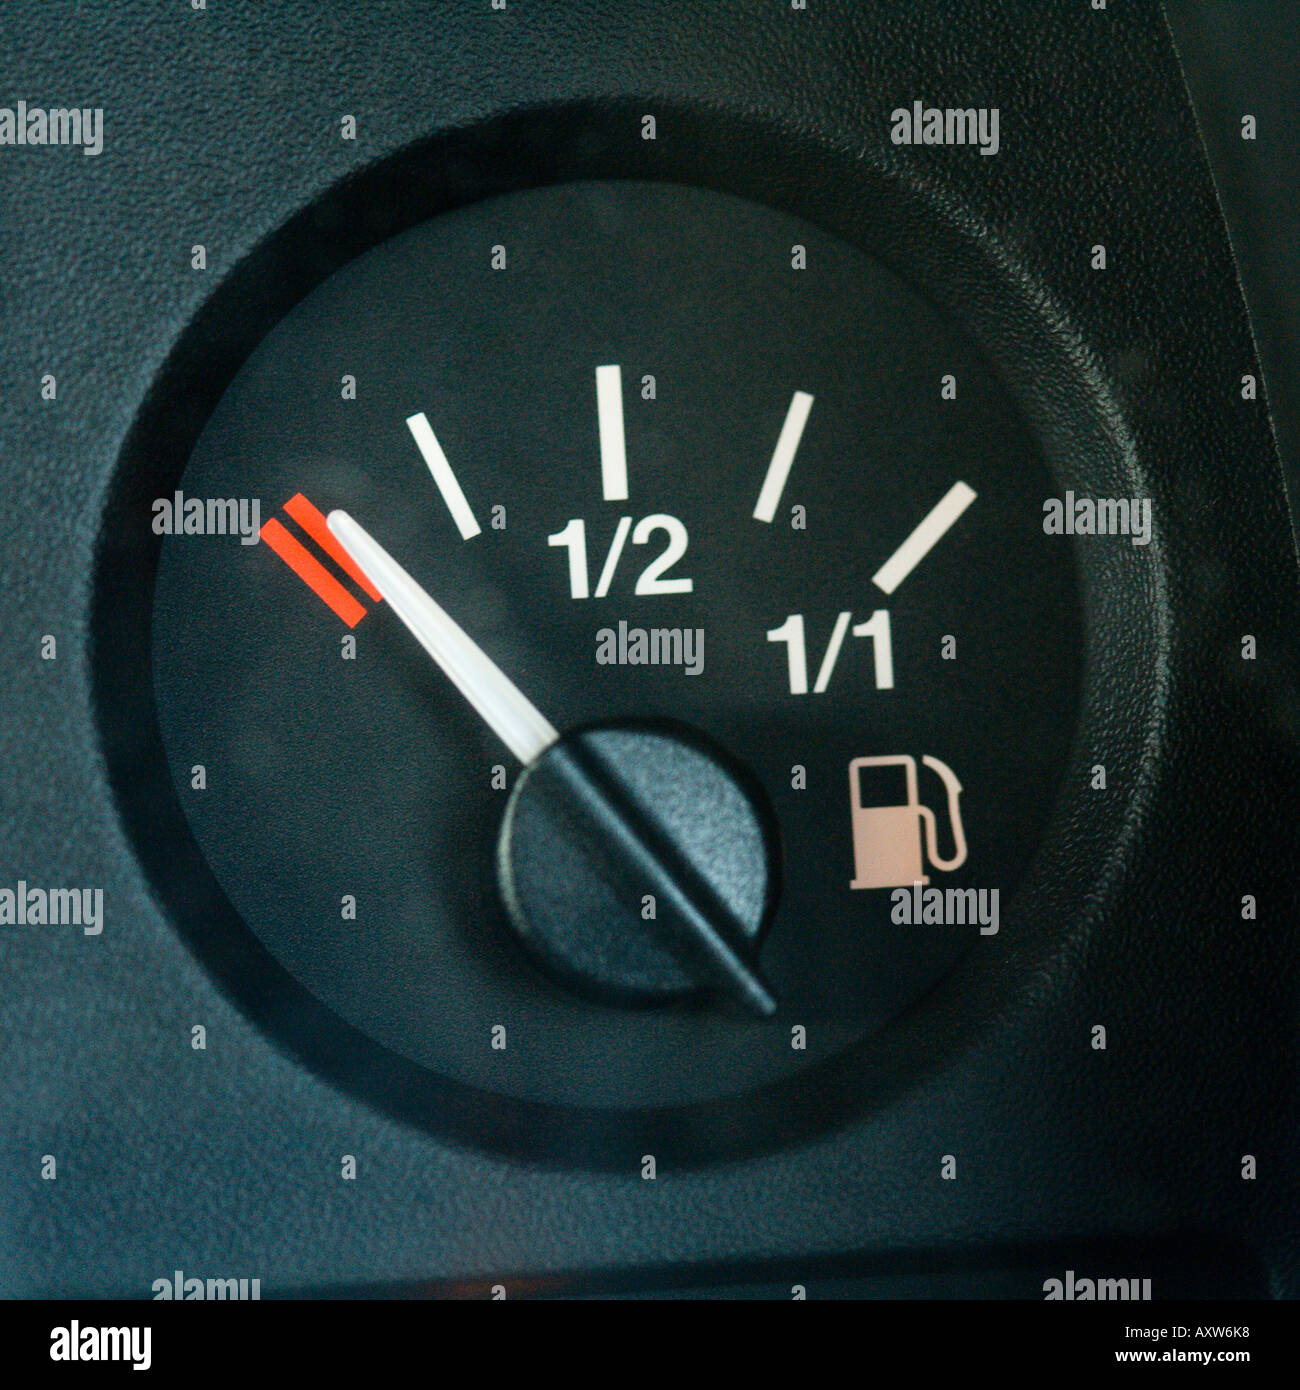 fuel gauge consept running on empty Stock Photo